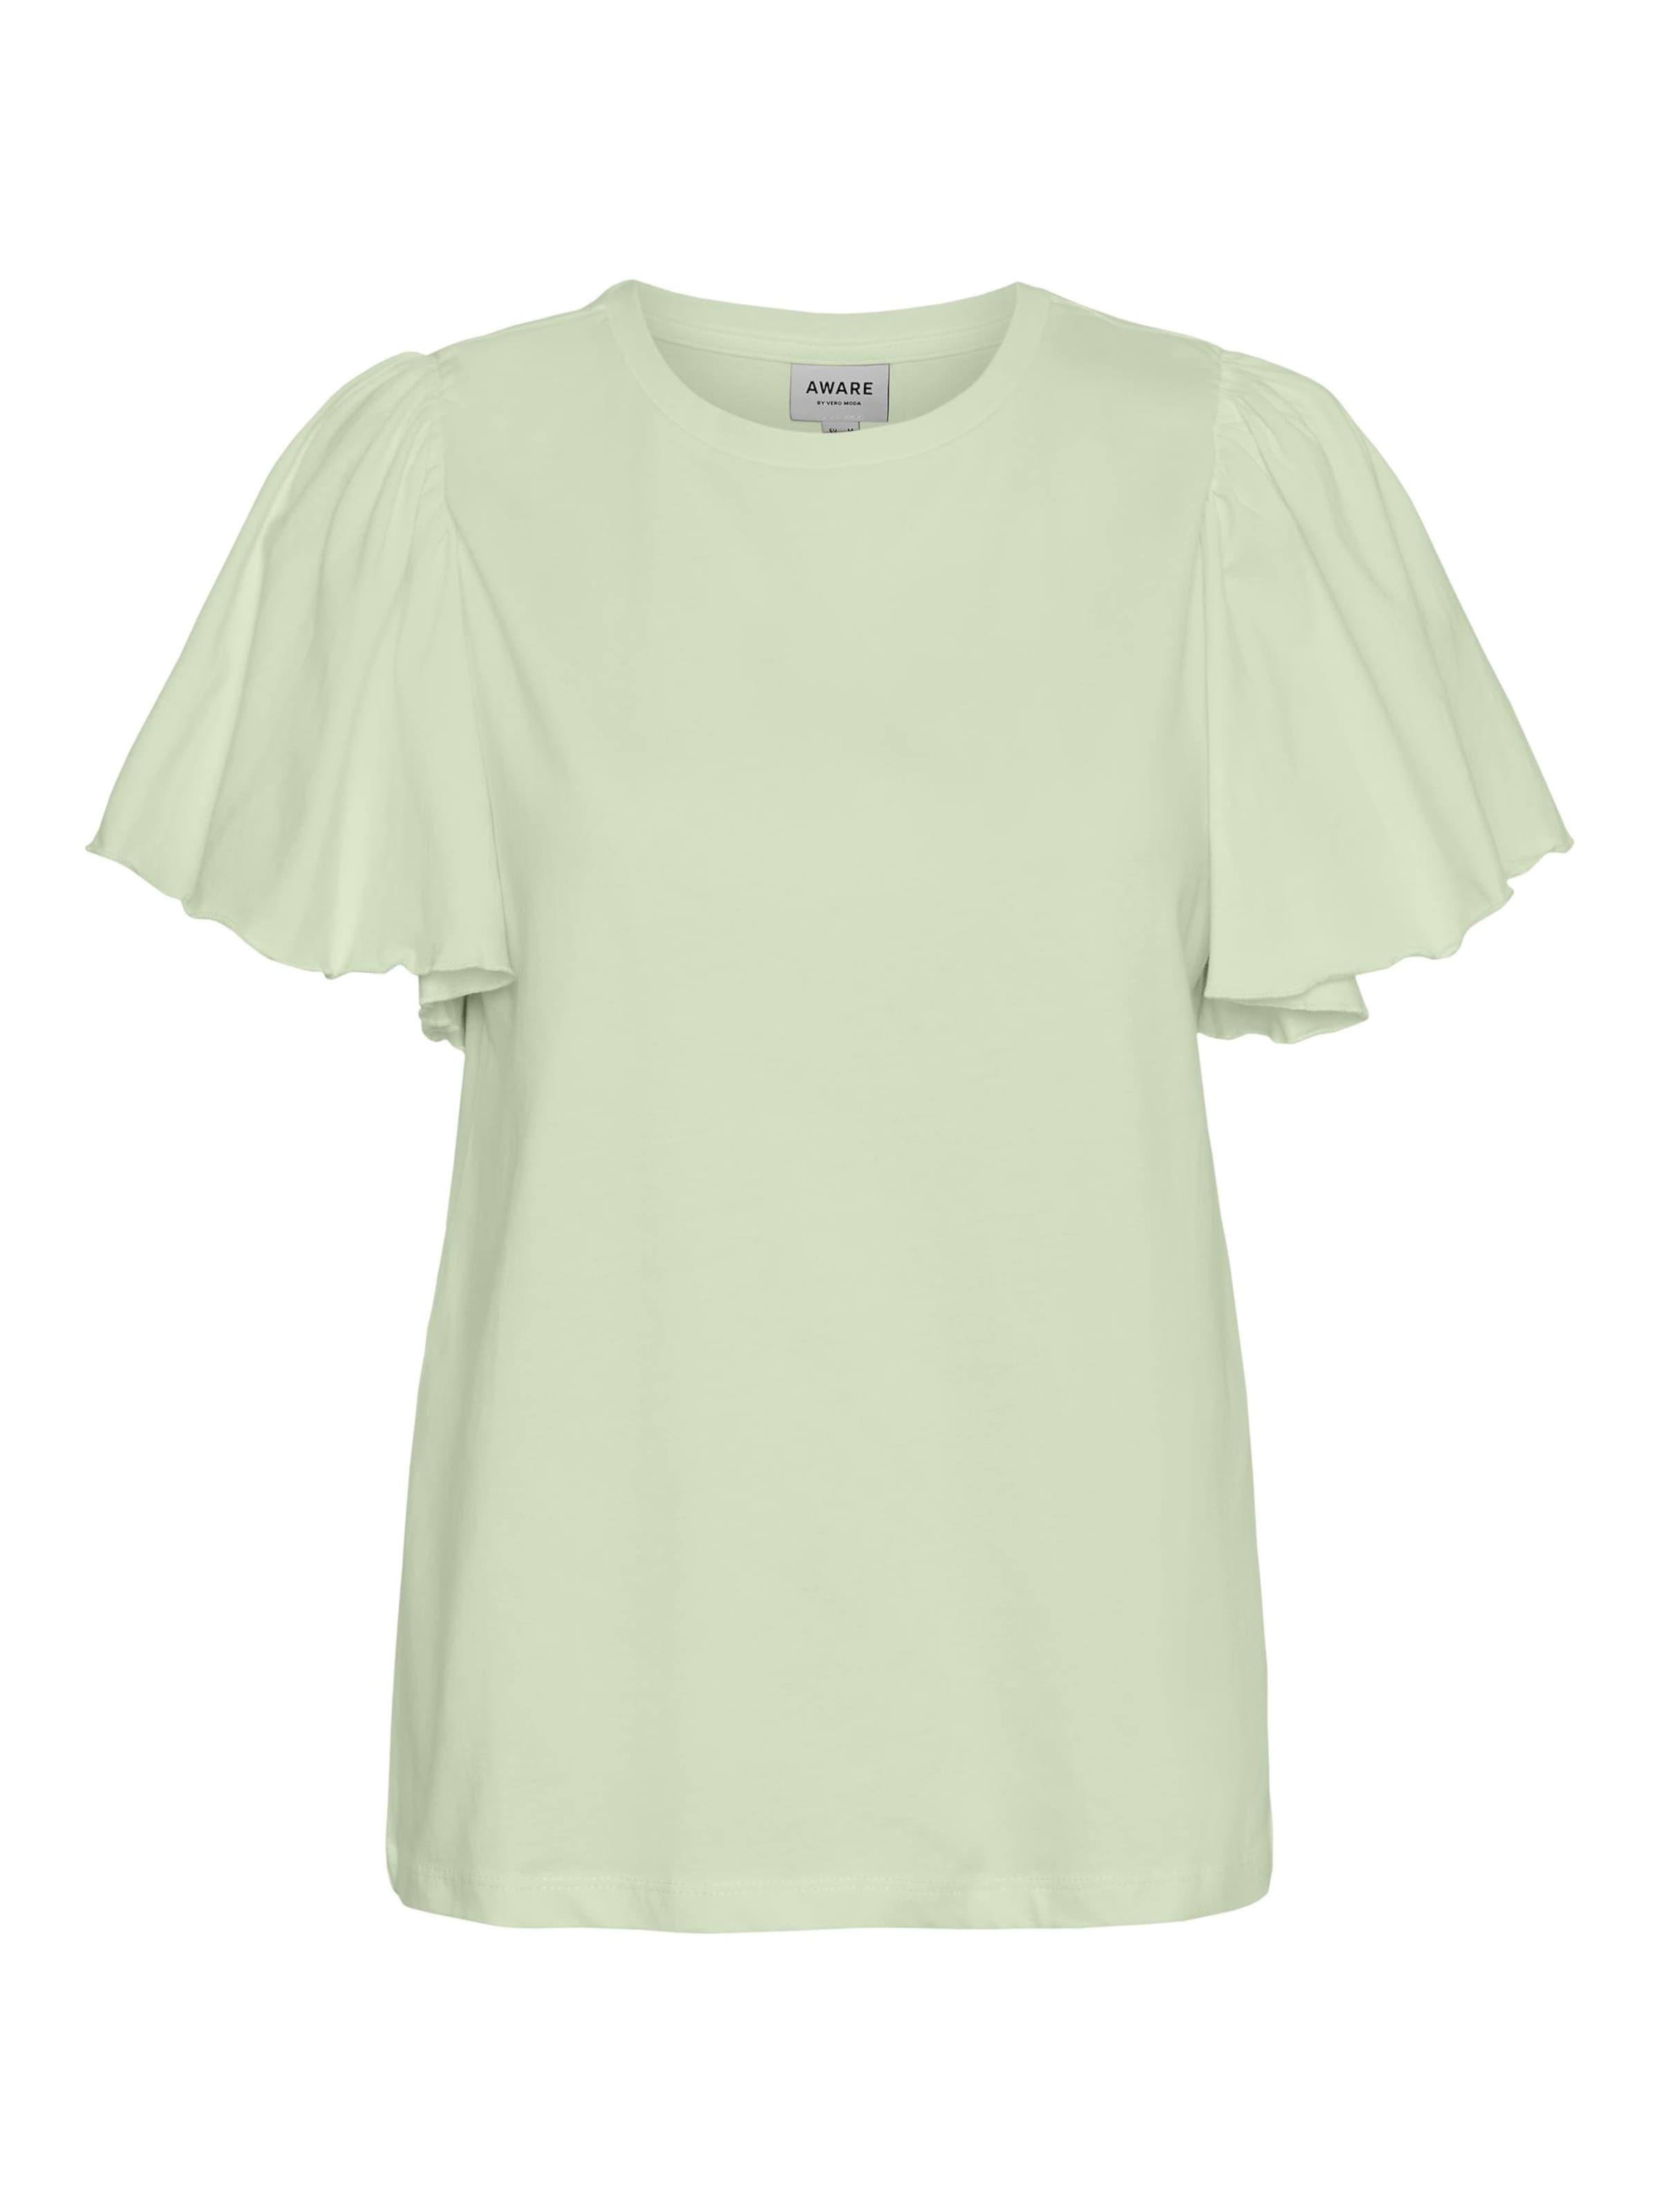 Vero Moda Aware T-Shirt L Vert